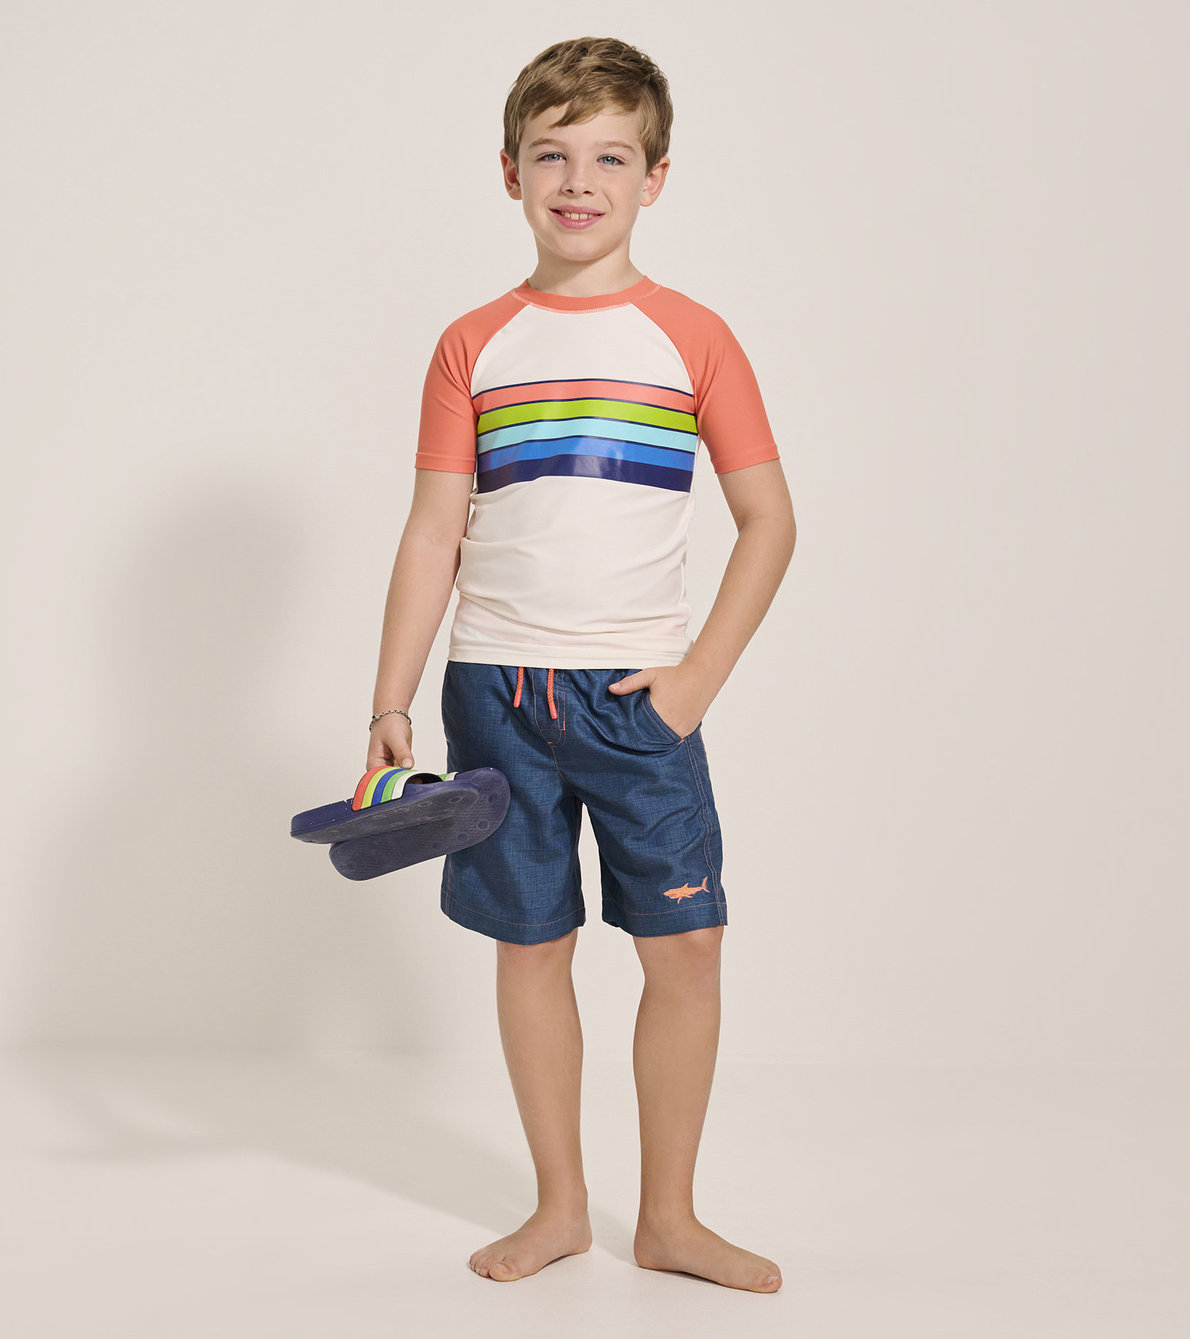 View larger image of Boys Surfer Stripes Short Sleeve Rashguard